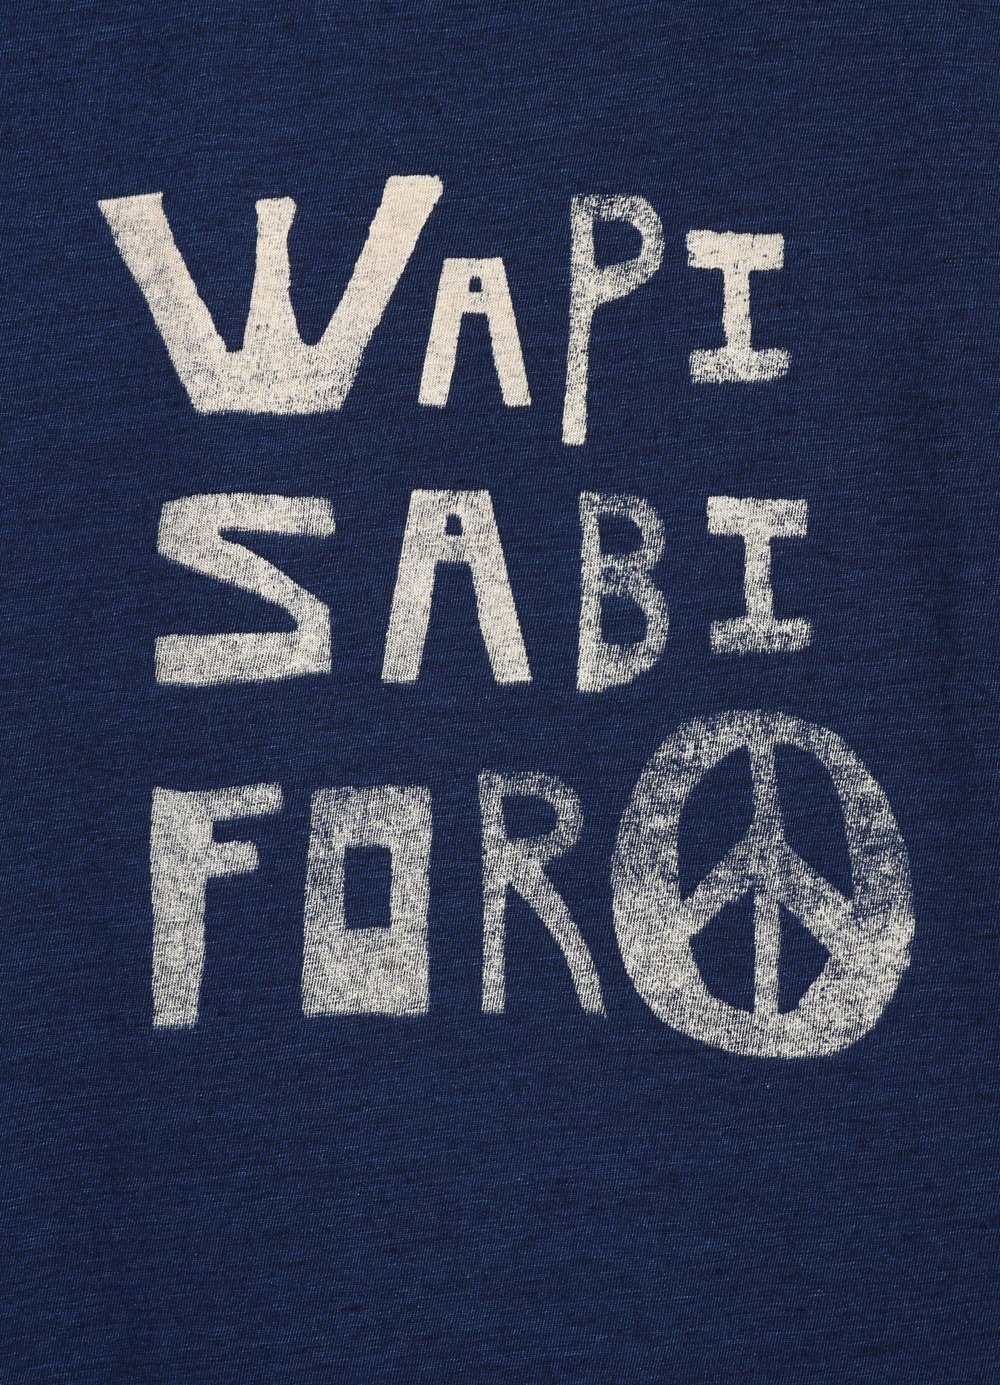 WAPI SABI FOR PEACE | Crew Neck T | Indigo | €170 -Kapital- HANSEN Garments